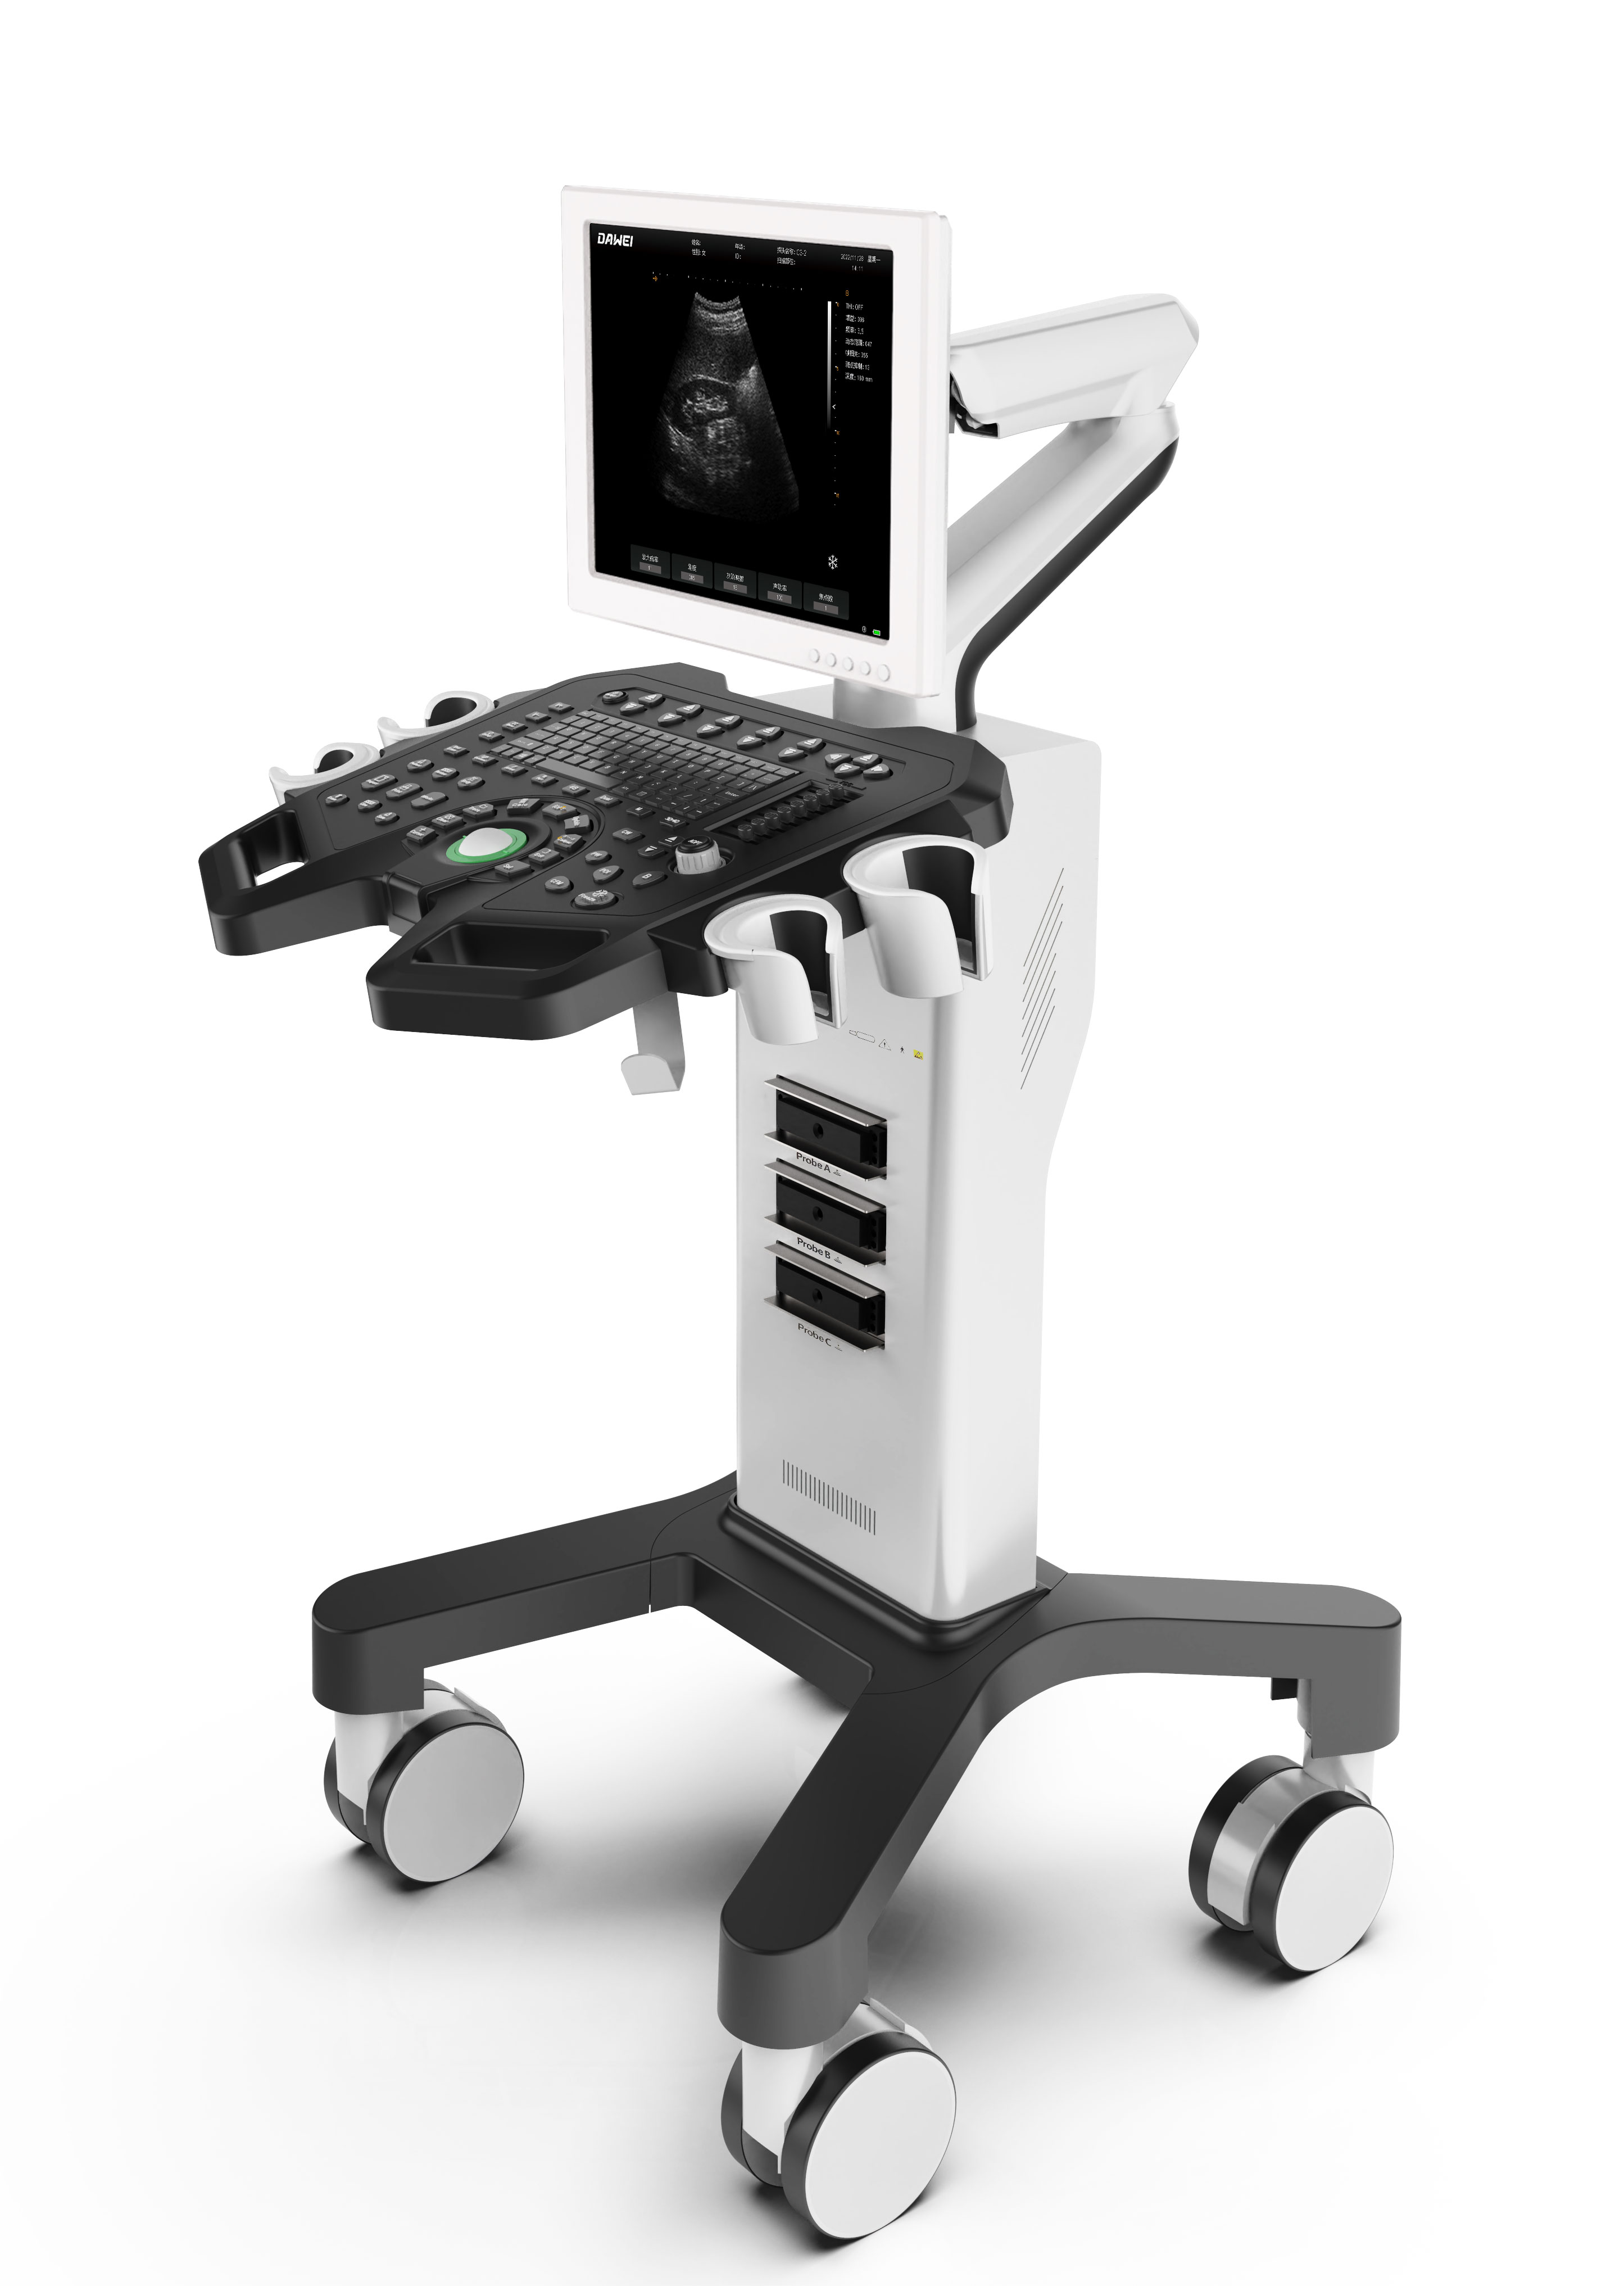 DW-370 black and white ultrasound machine